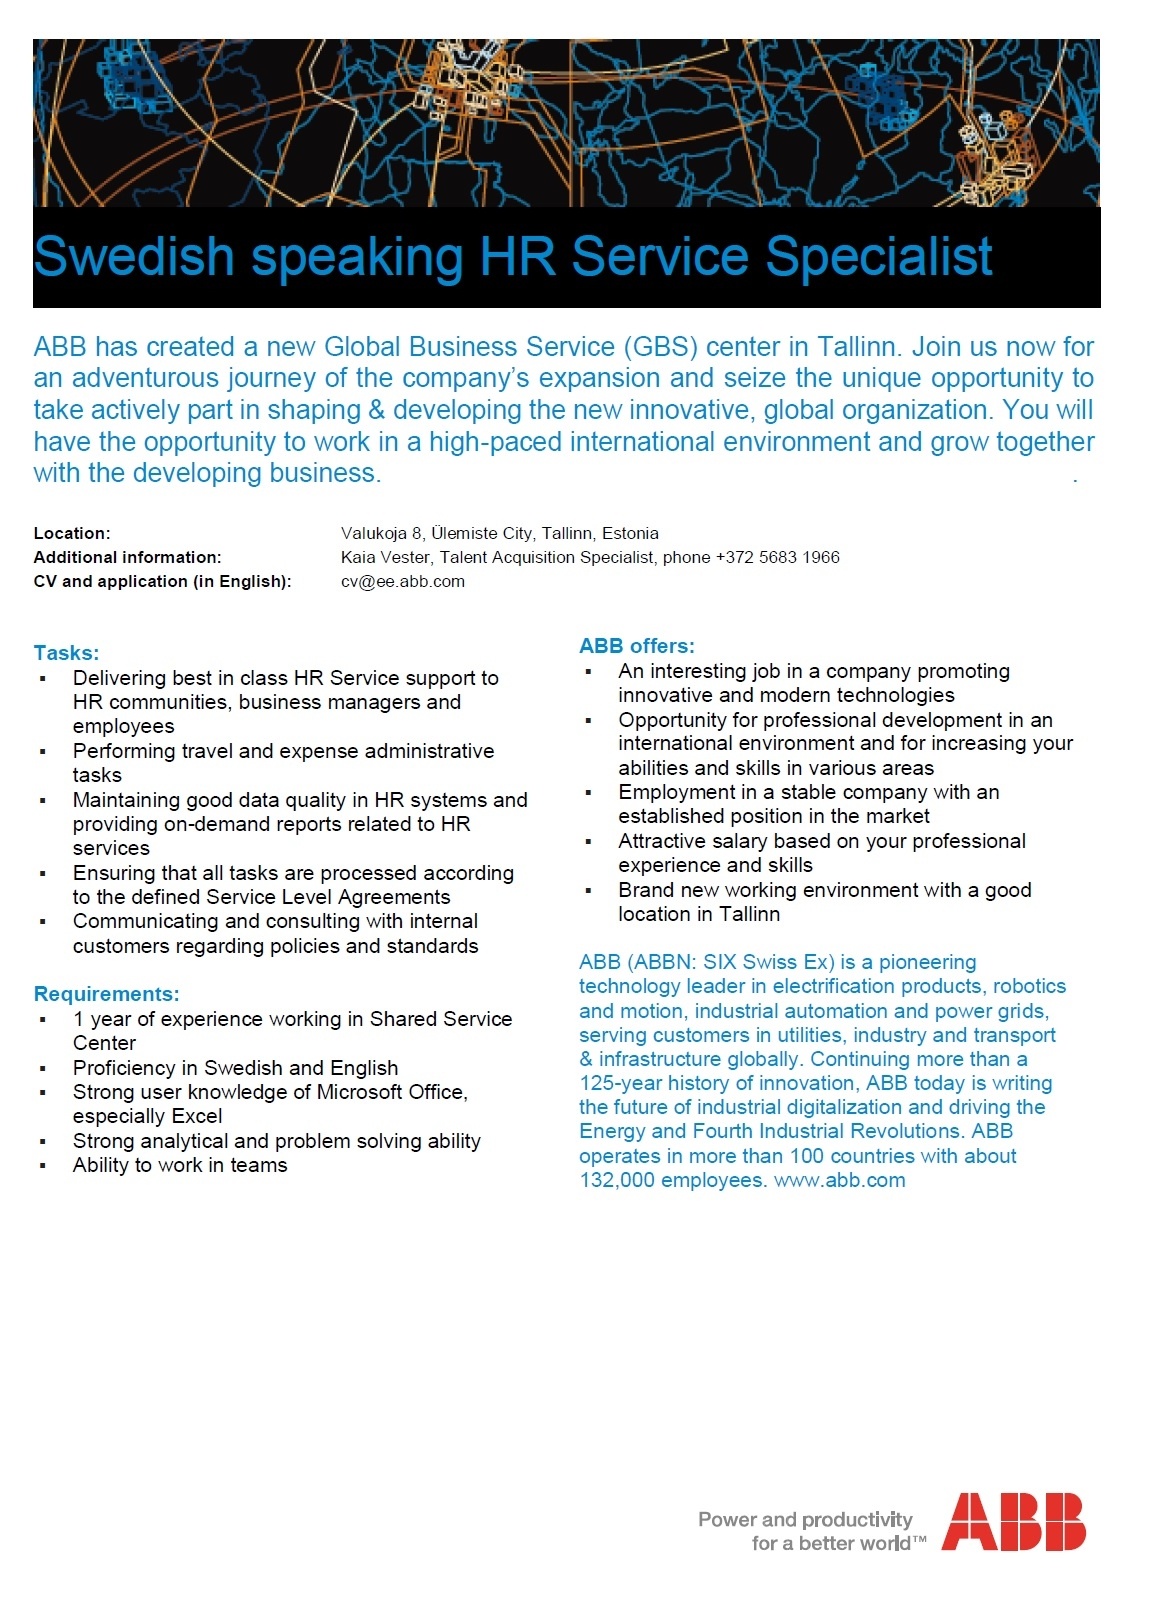 ABB AS Swedish speaking HR Service Specialist